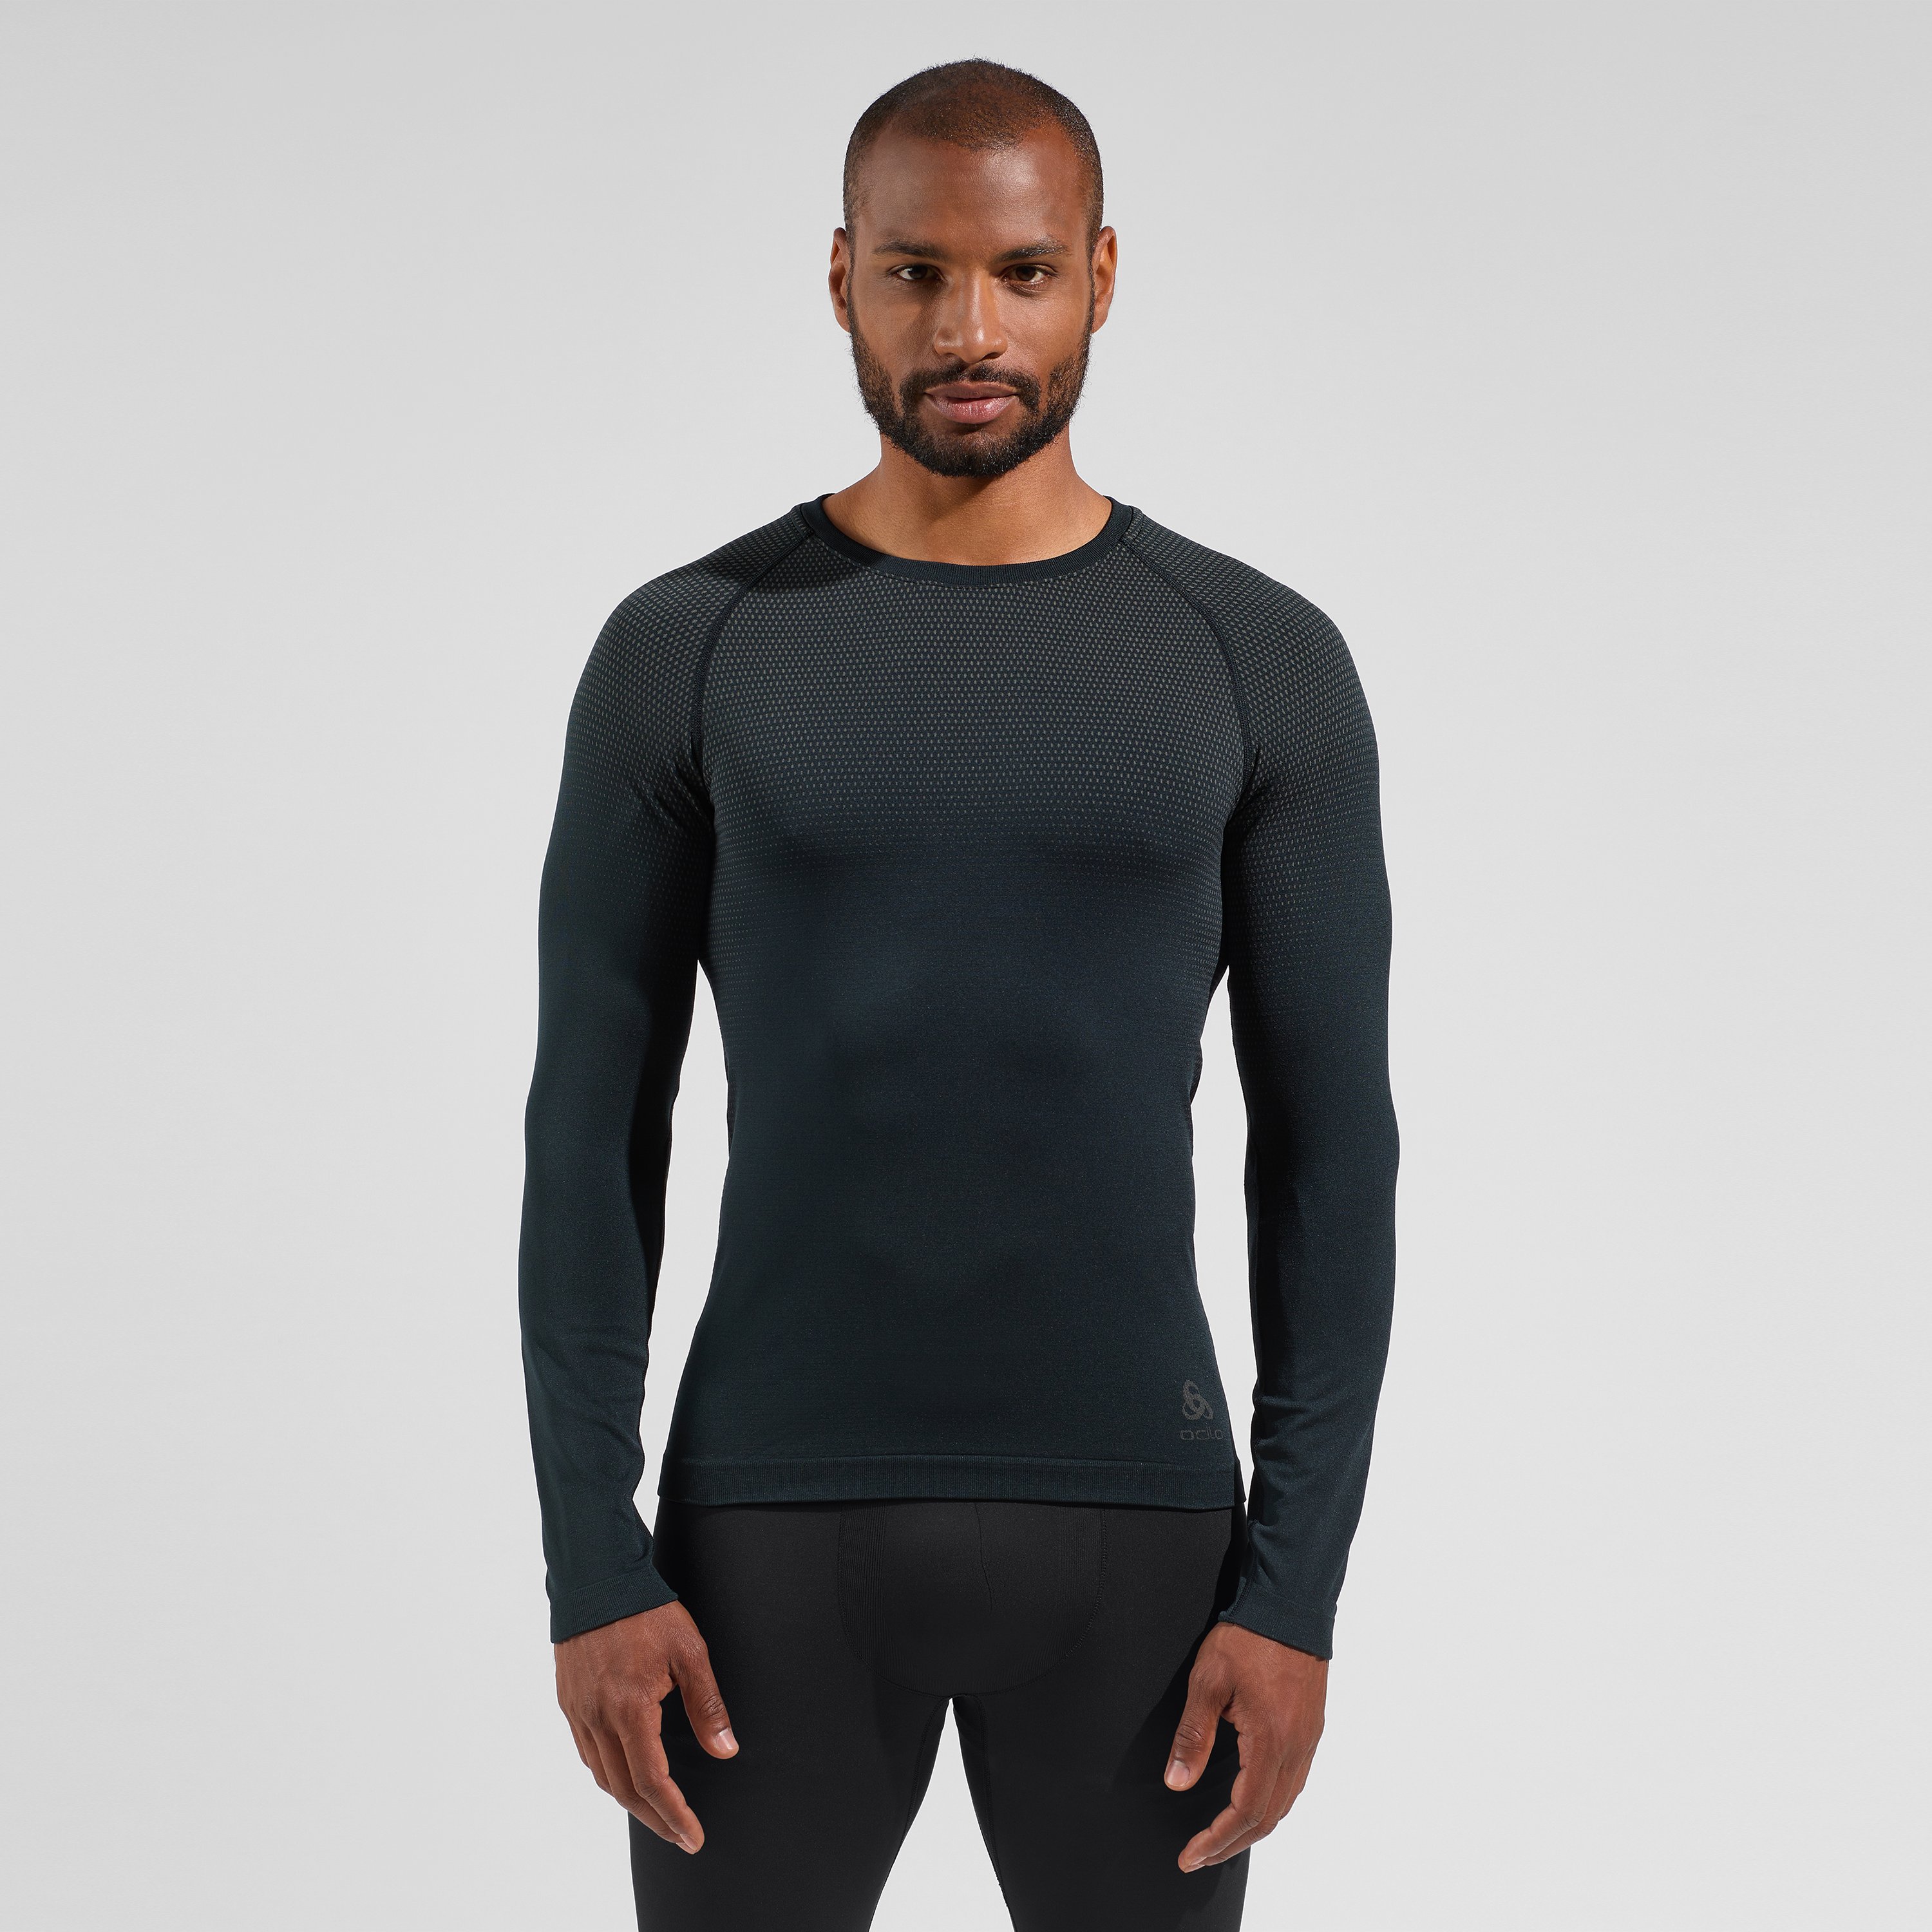 ODLO Performance Light Langarm-Shirt für Herren, XL, schwarz